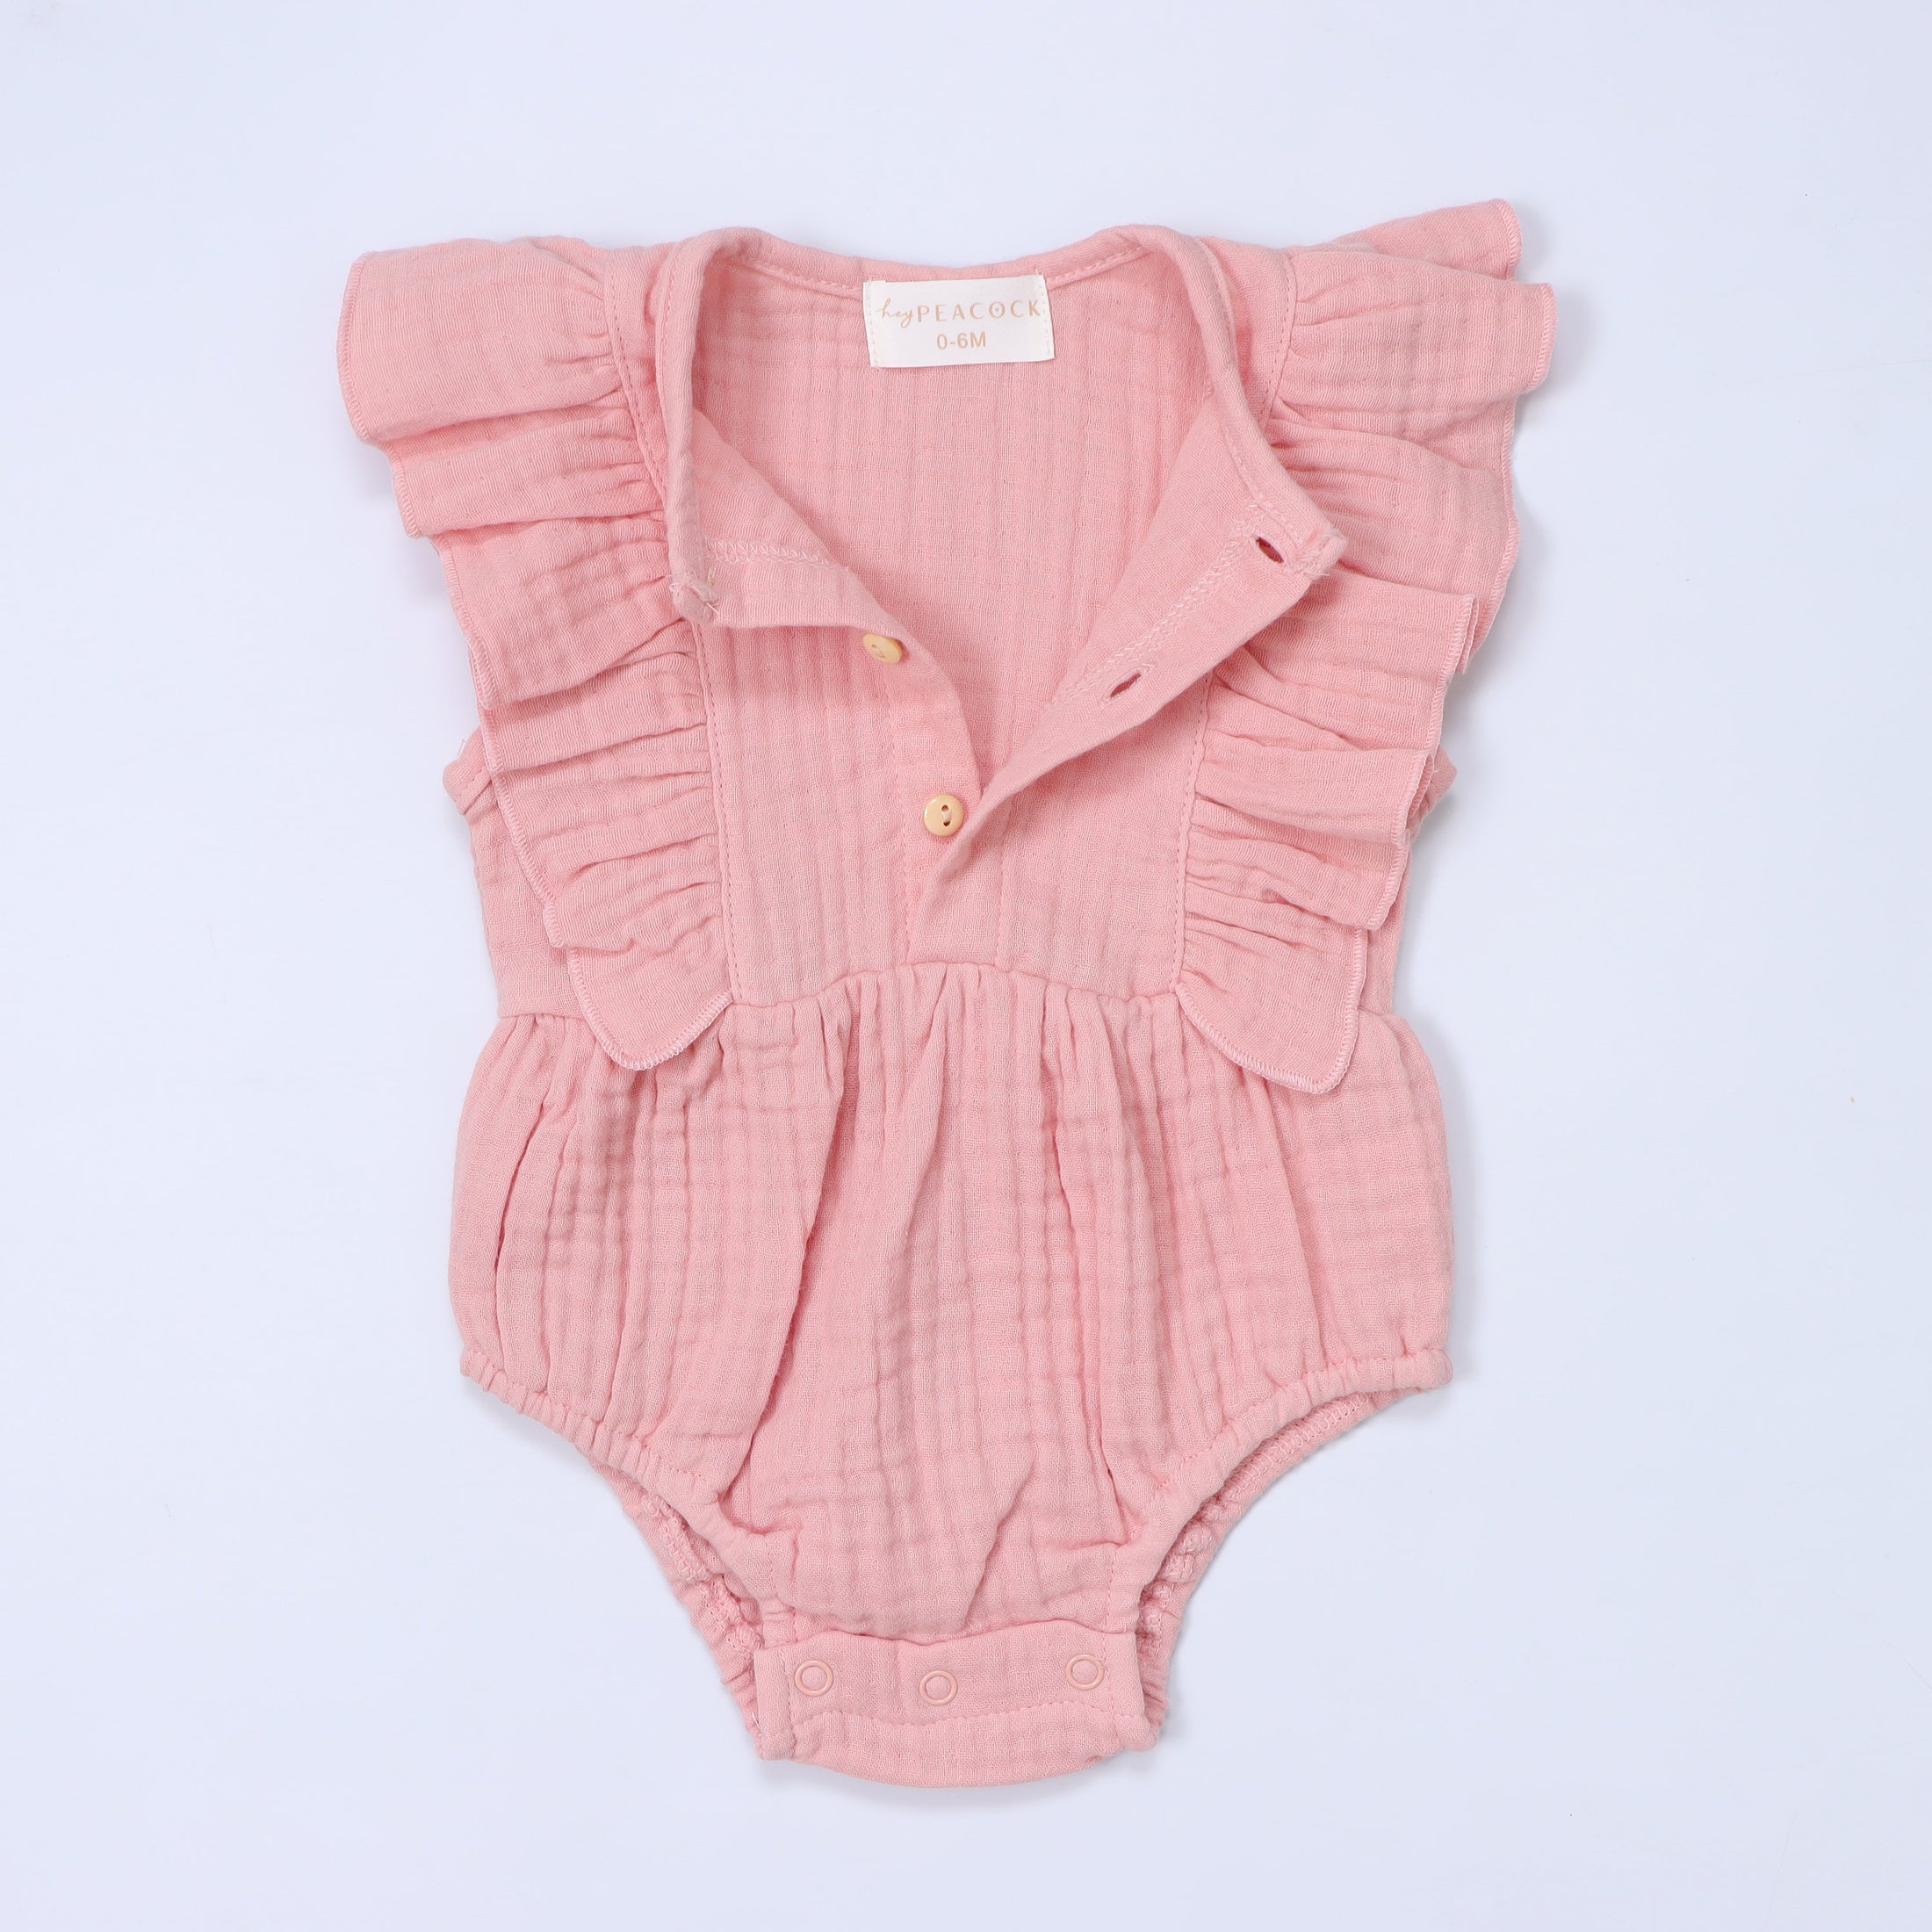 Baby Ruffle Romper (100% Muslin Cotton) Pink